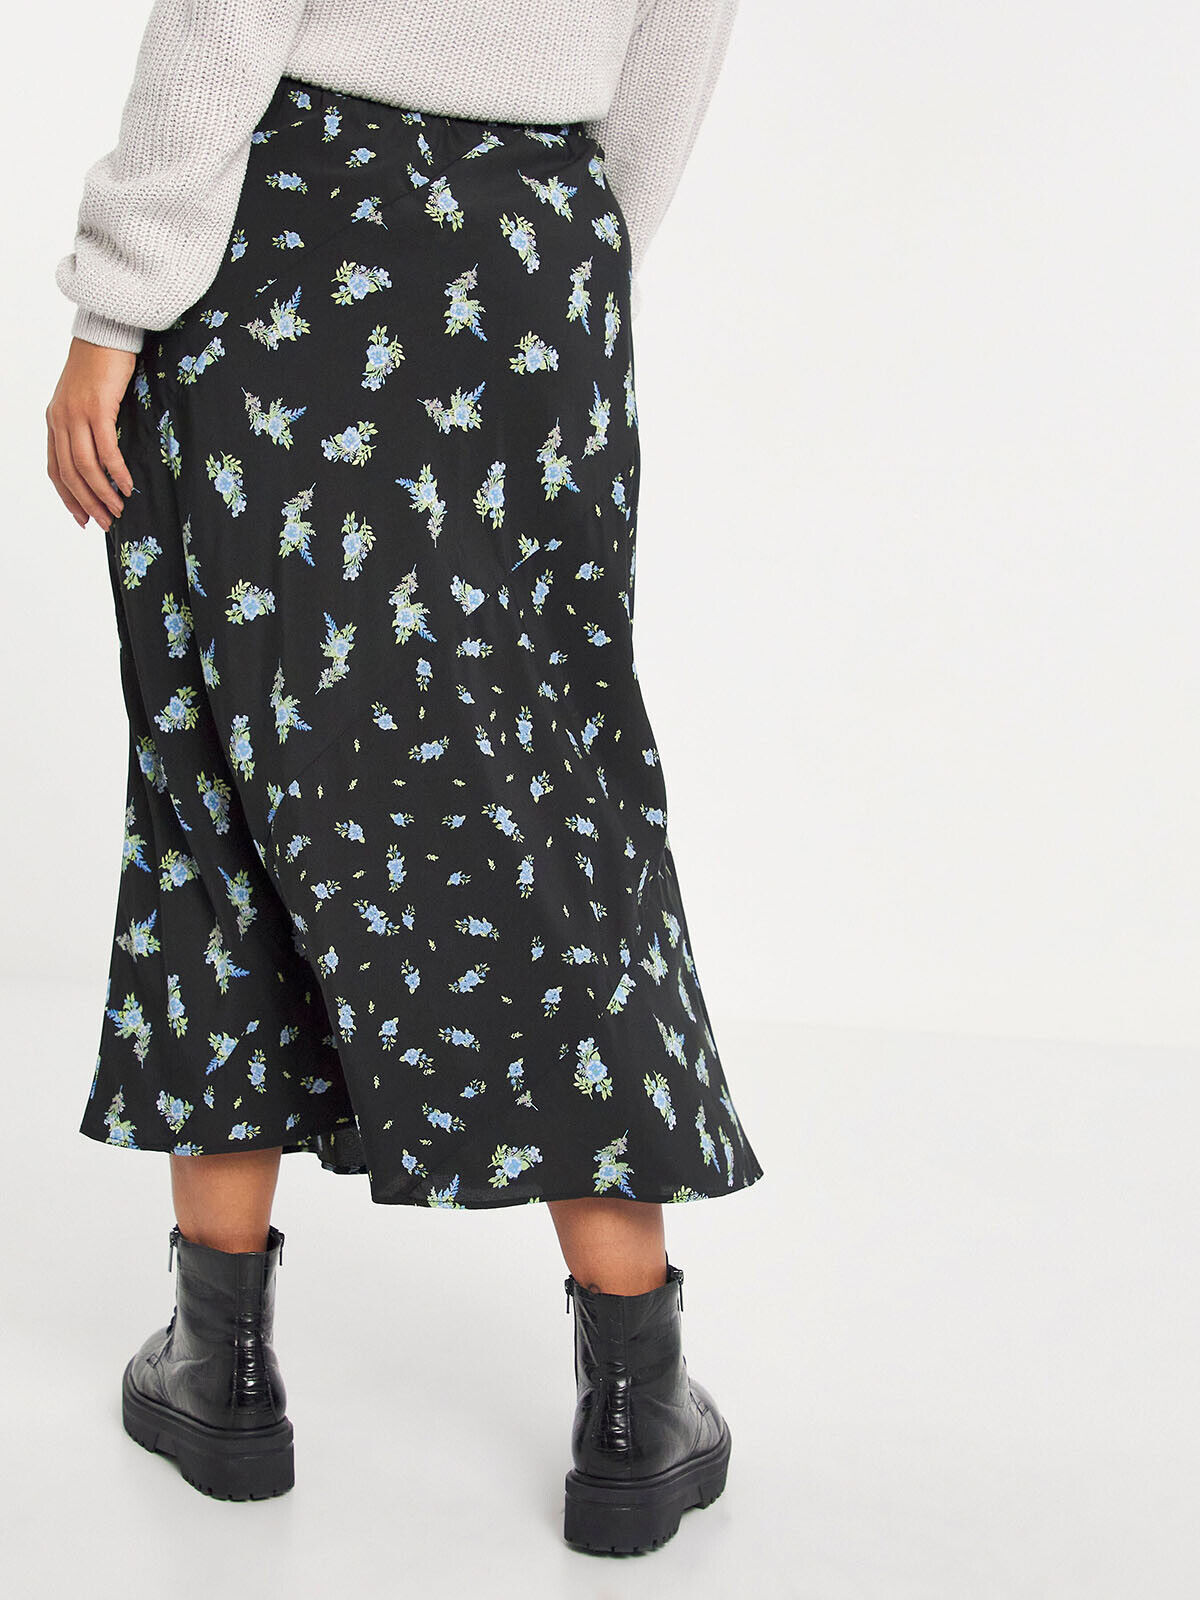 Simply Be Black Mixed Print Asymmetric Skirt in Sizes 18, 20, 24